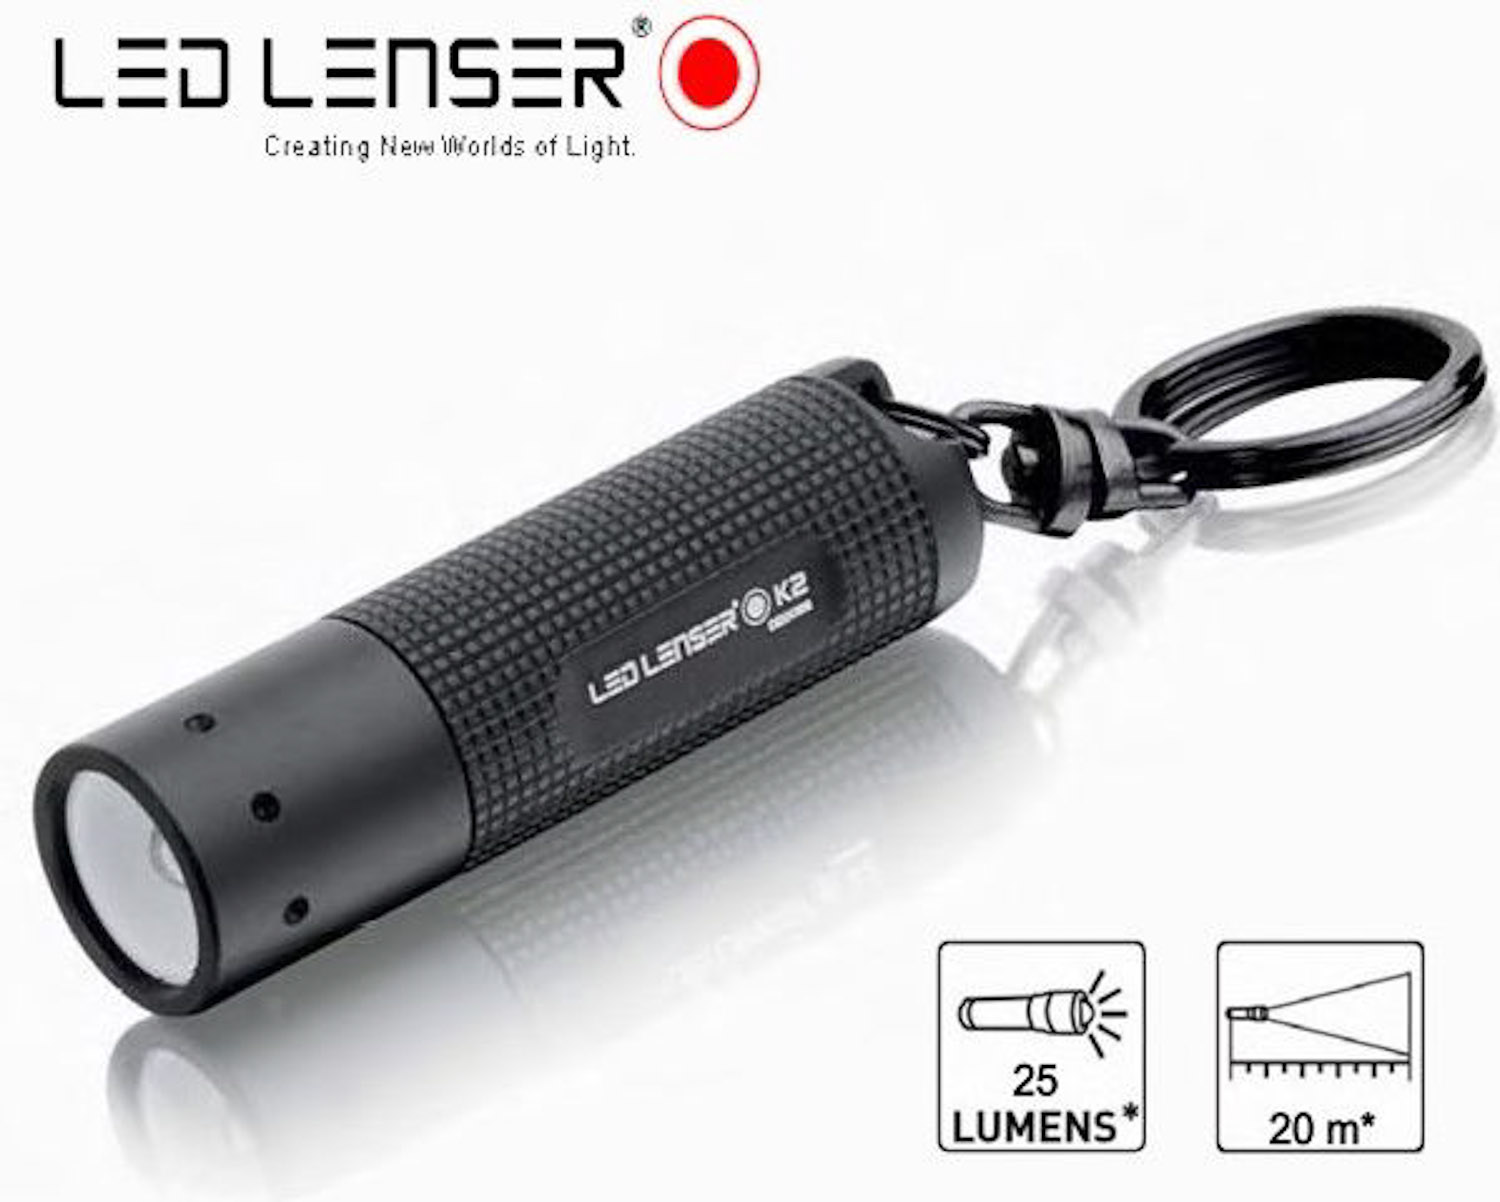 LED Lenser-Torcia k2 NERO 25 lumen 20 METRI lunghezza nuovo OVP 